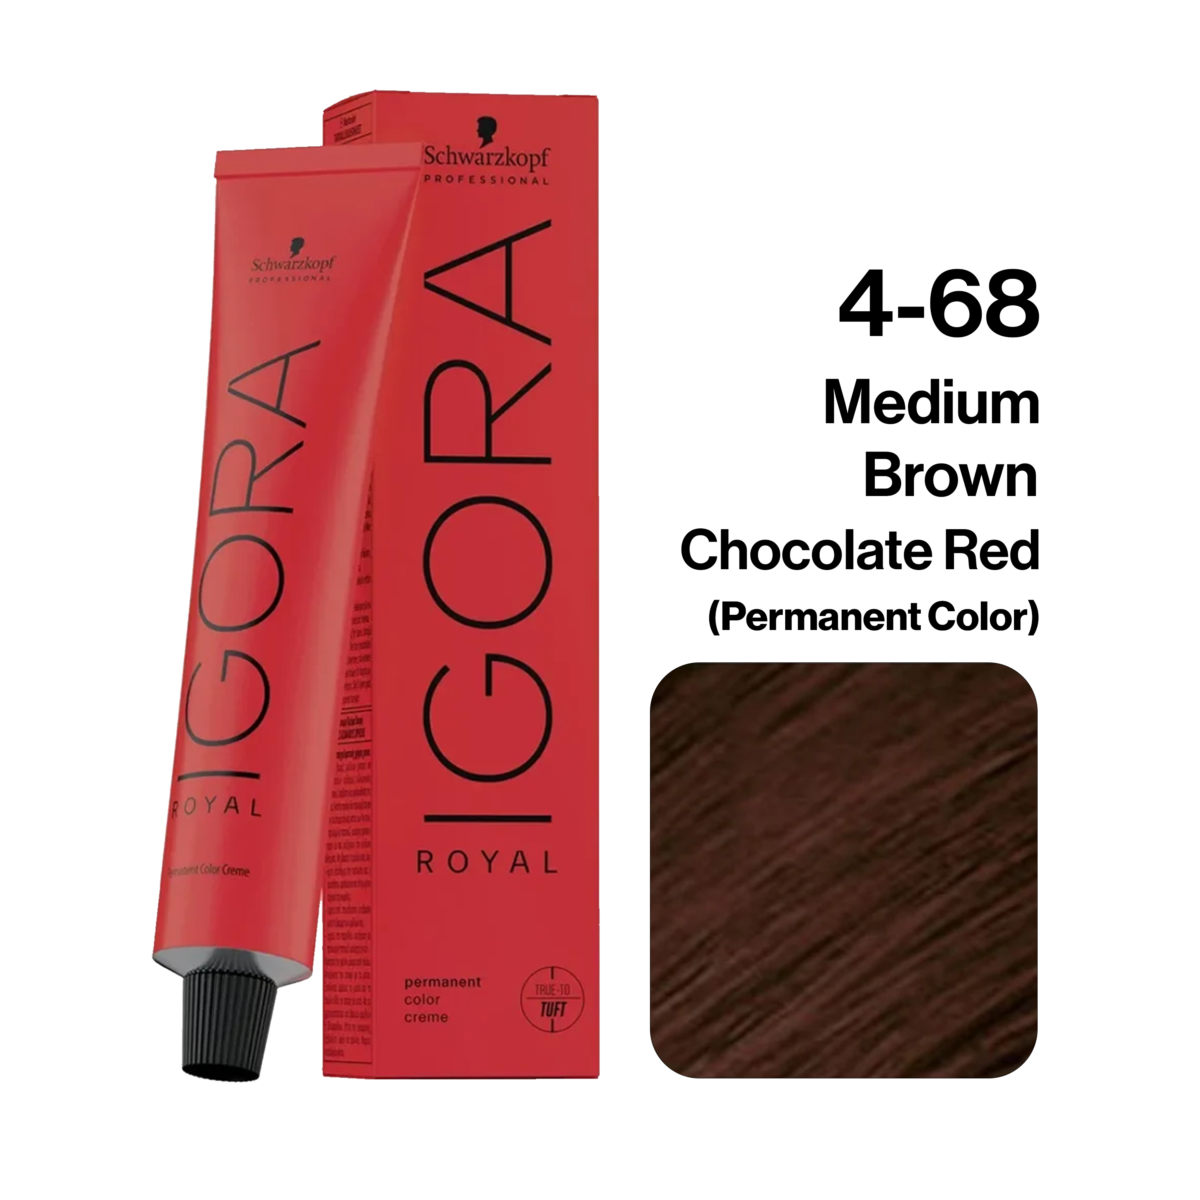 Schwarzkopf Igora Royal Hair Color, 4-68 Medium Brown Chocolate Red 60ml